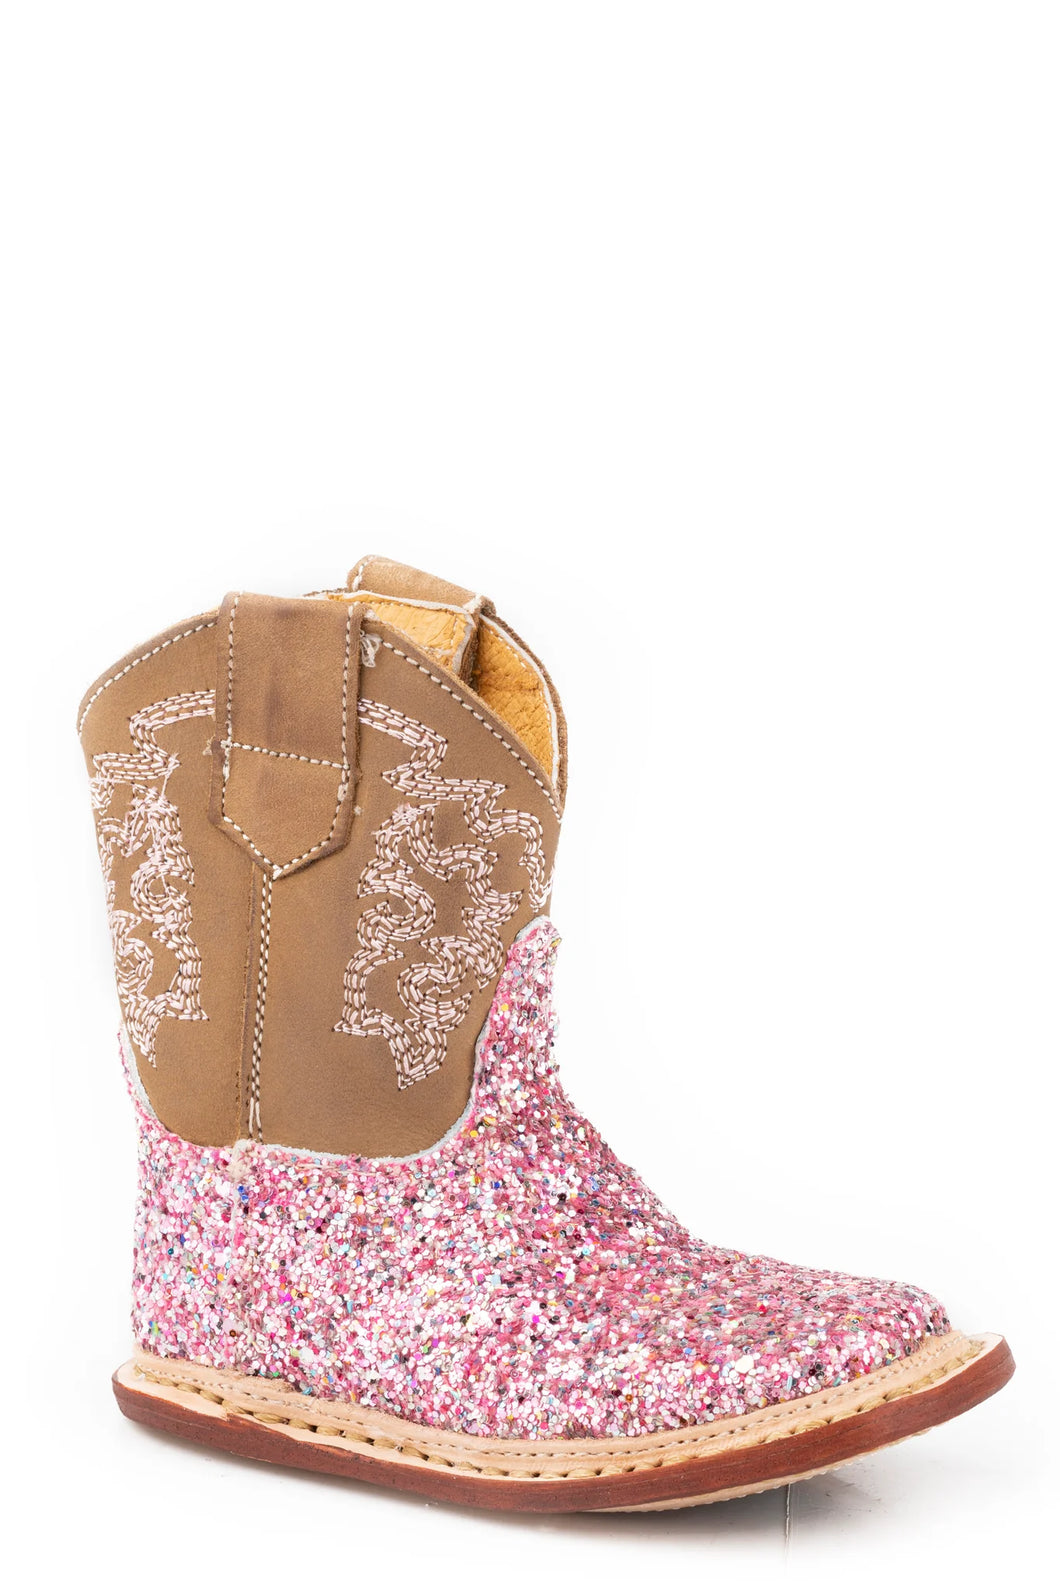 Roper Infant Pink Glitter Boots